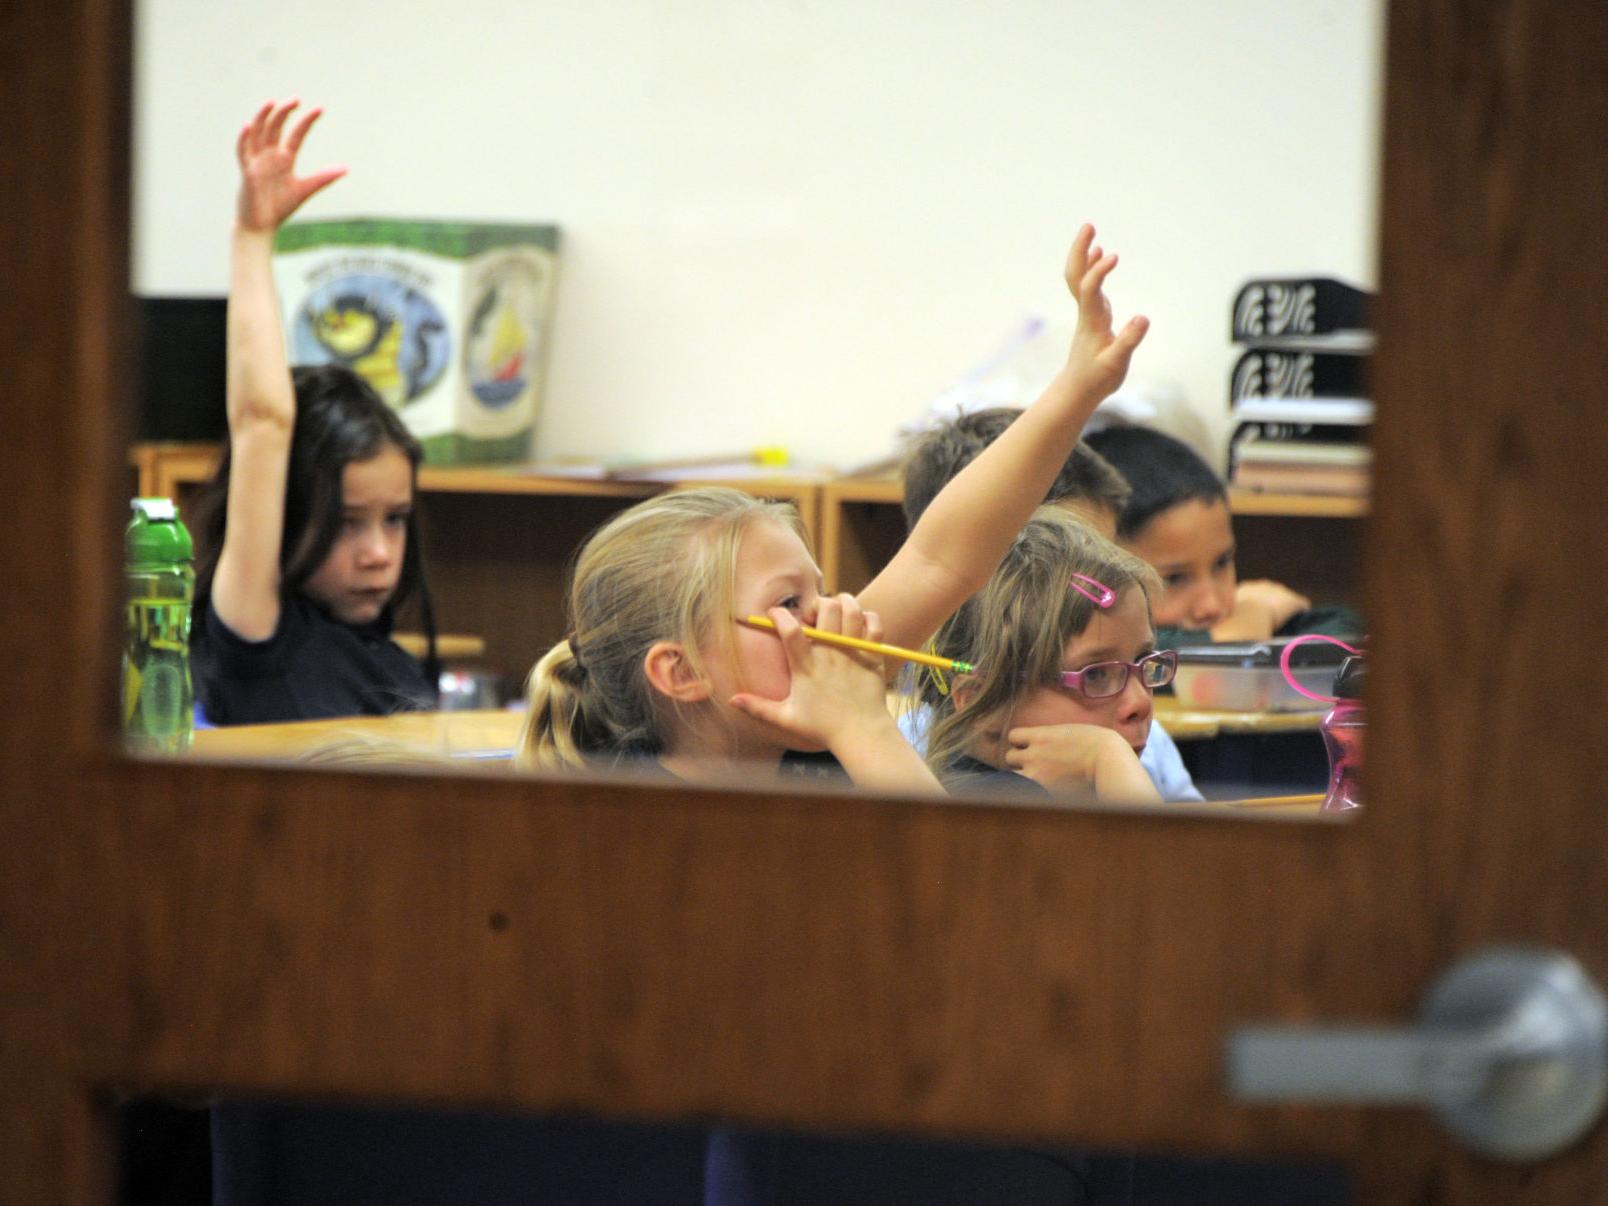 Colorado Springs Parent Files Lawsuit Against School For Plans To